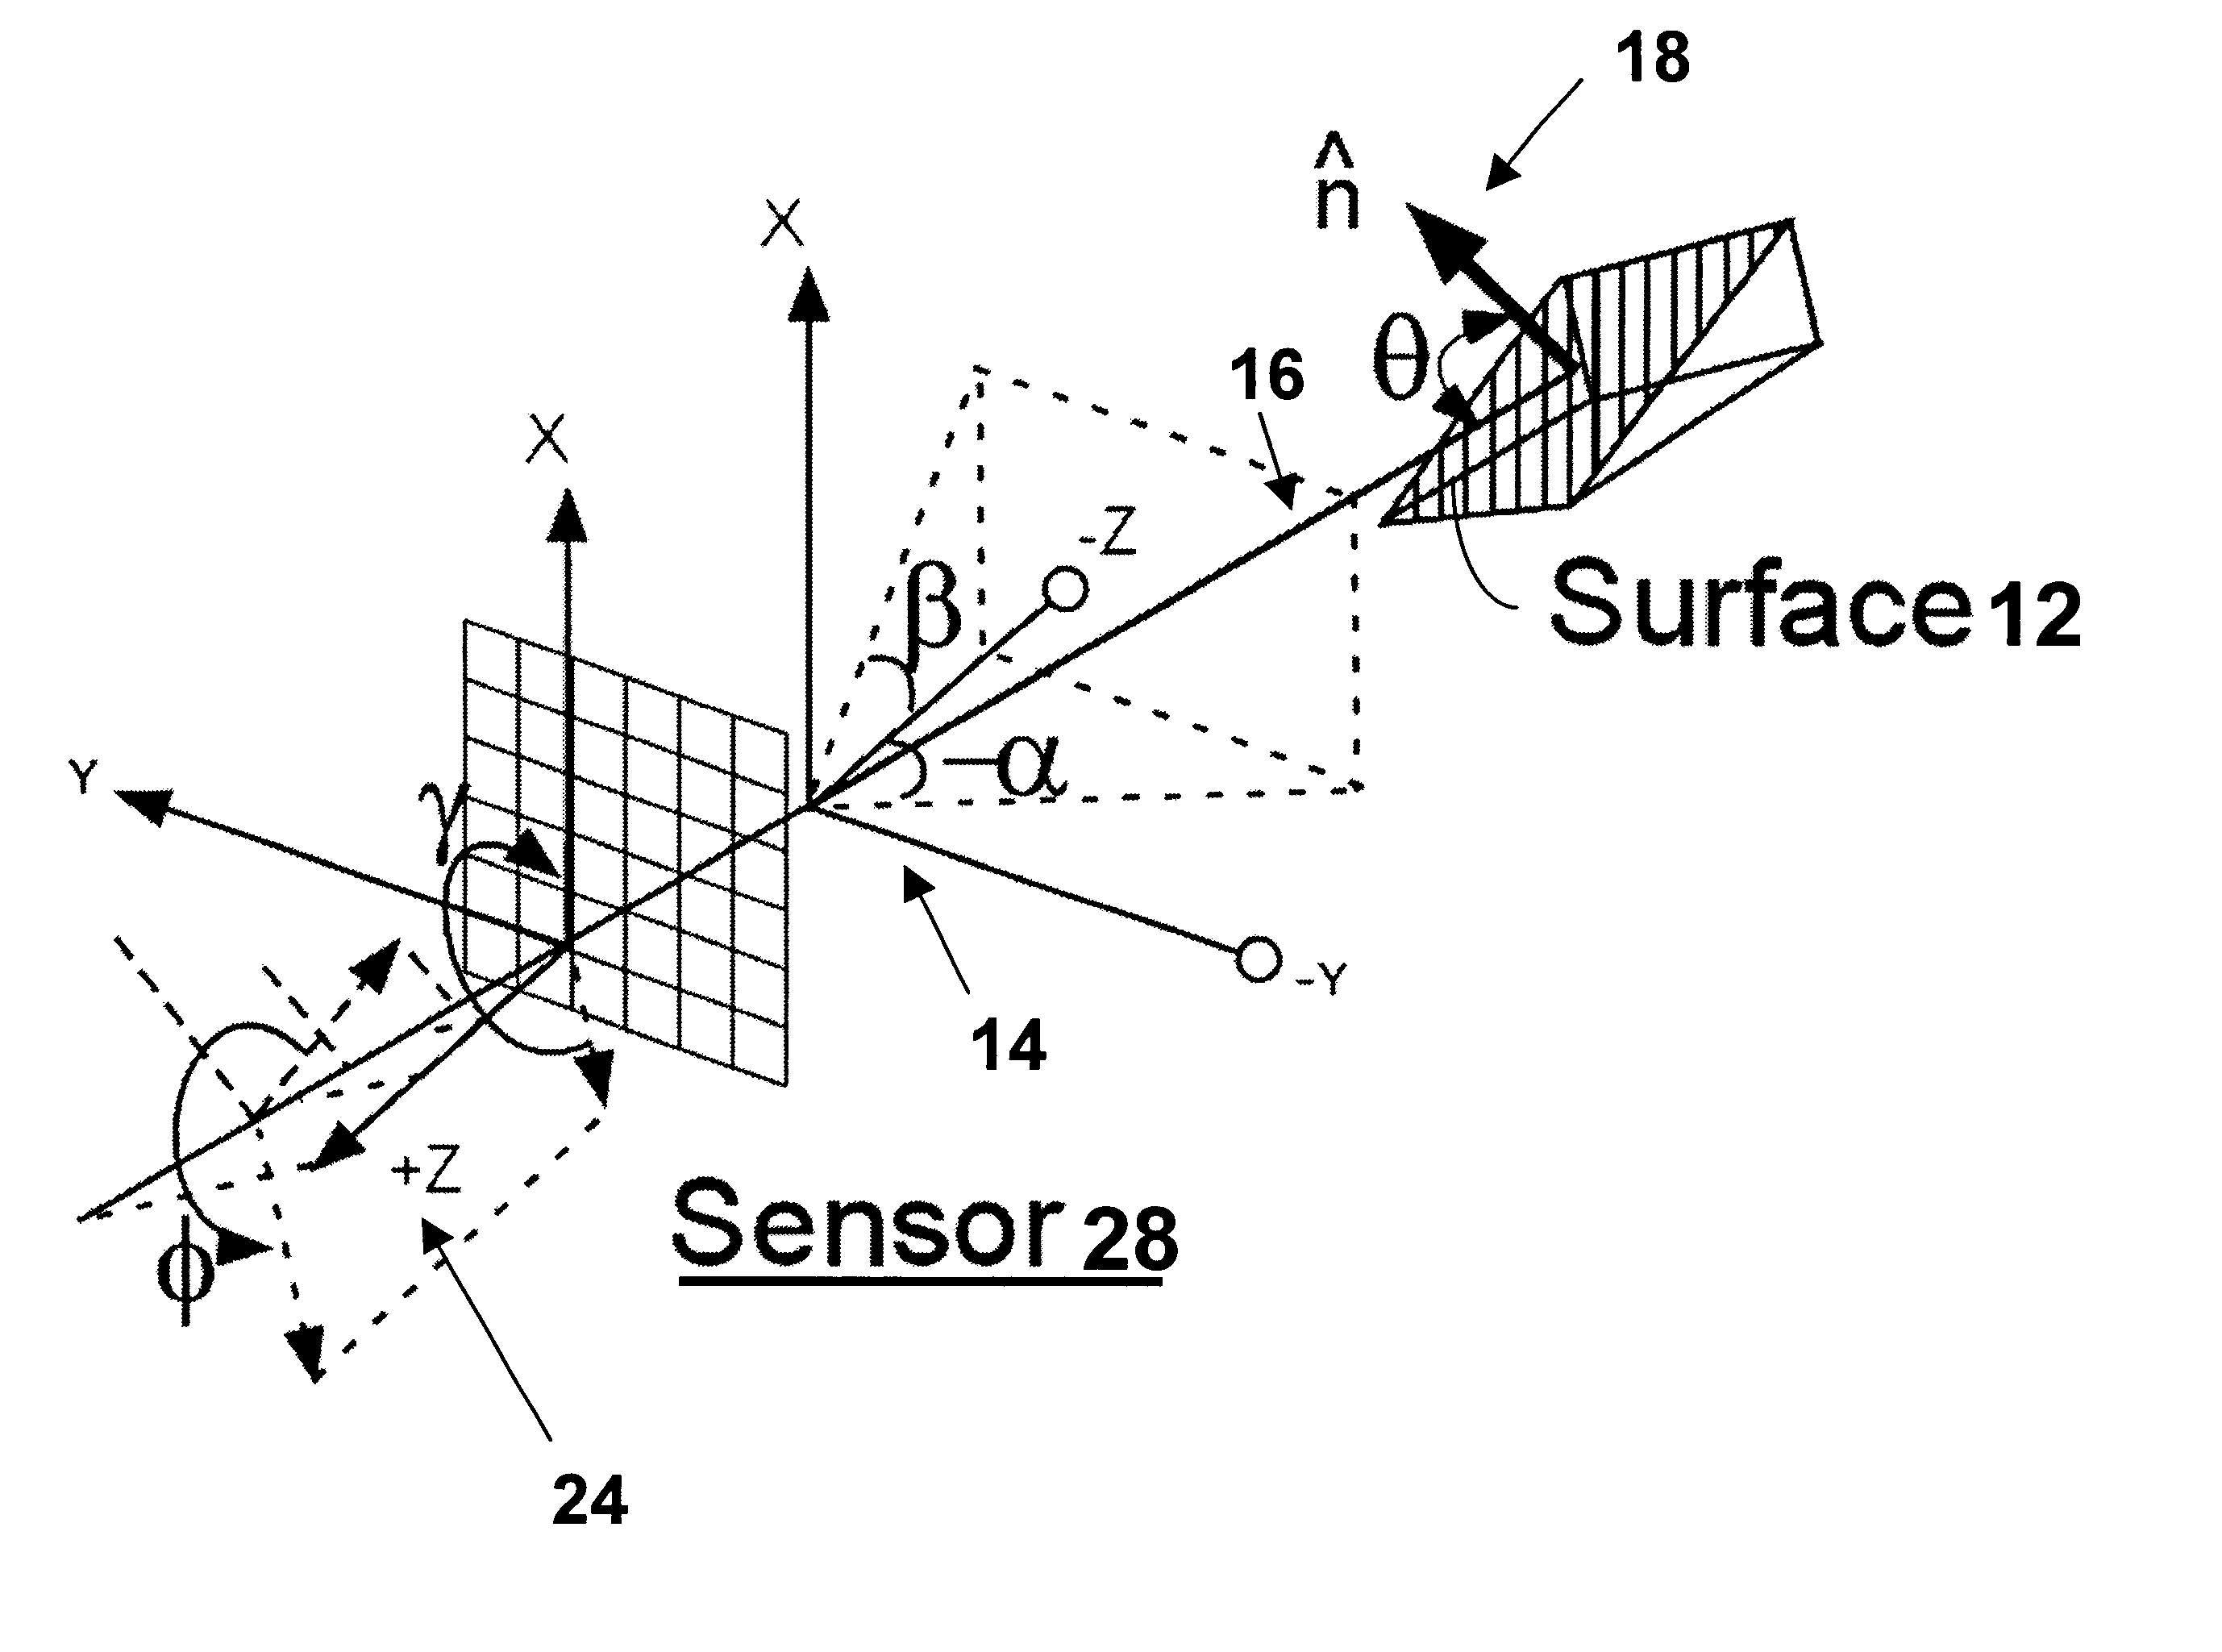 Spectro-polarimetric remote surface-orientation measurement